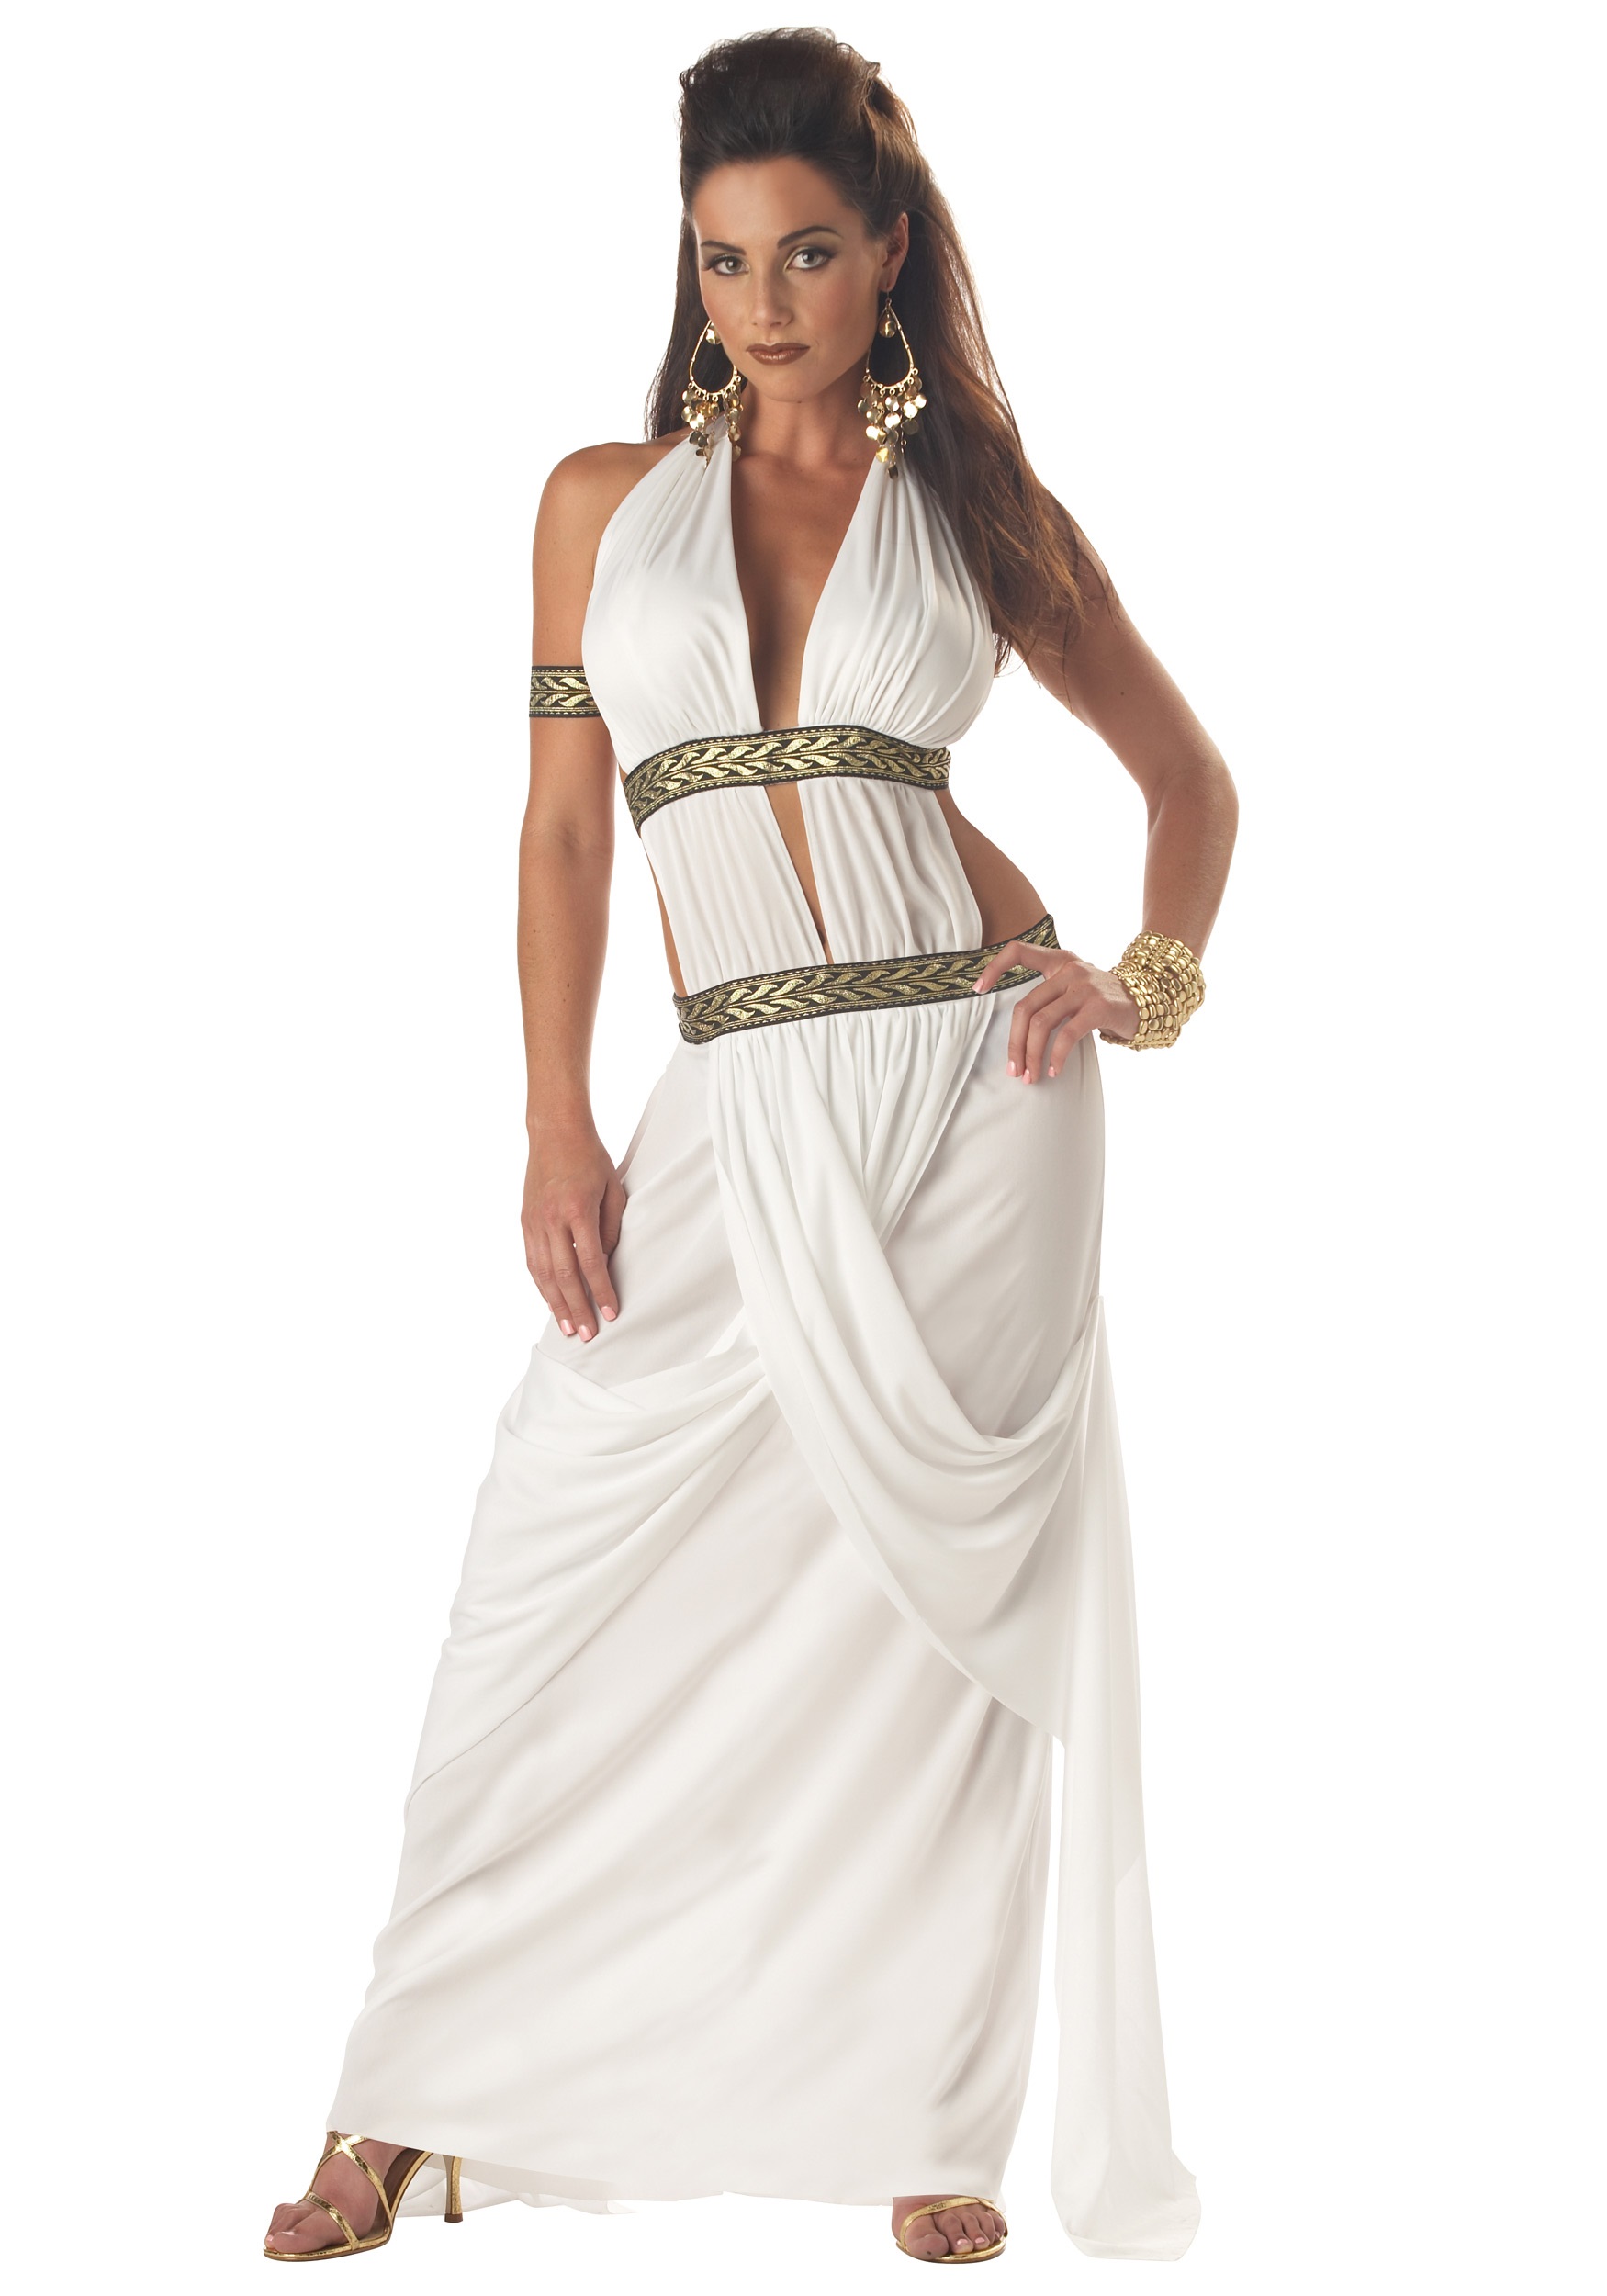 Photos - Fancy Dress California Costume Collection Fierce Spartan Queen Women's Costume White C